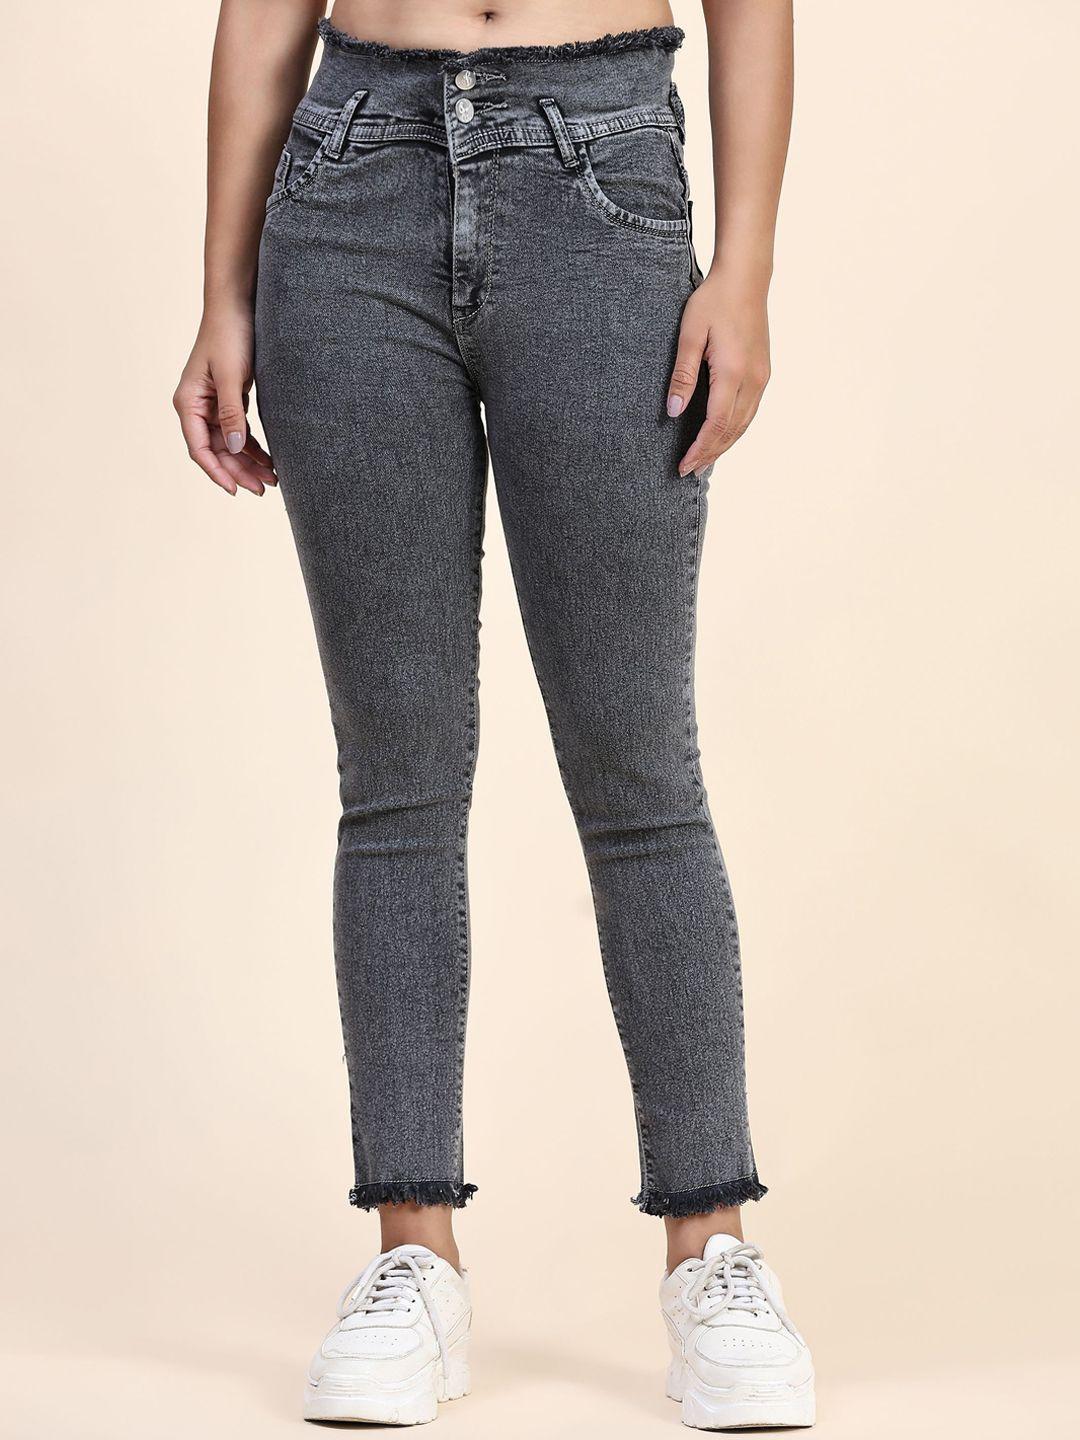 baesd women high-rise clean look jeans